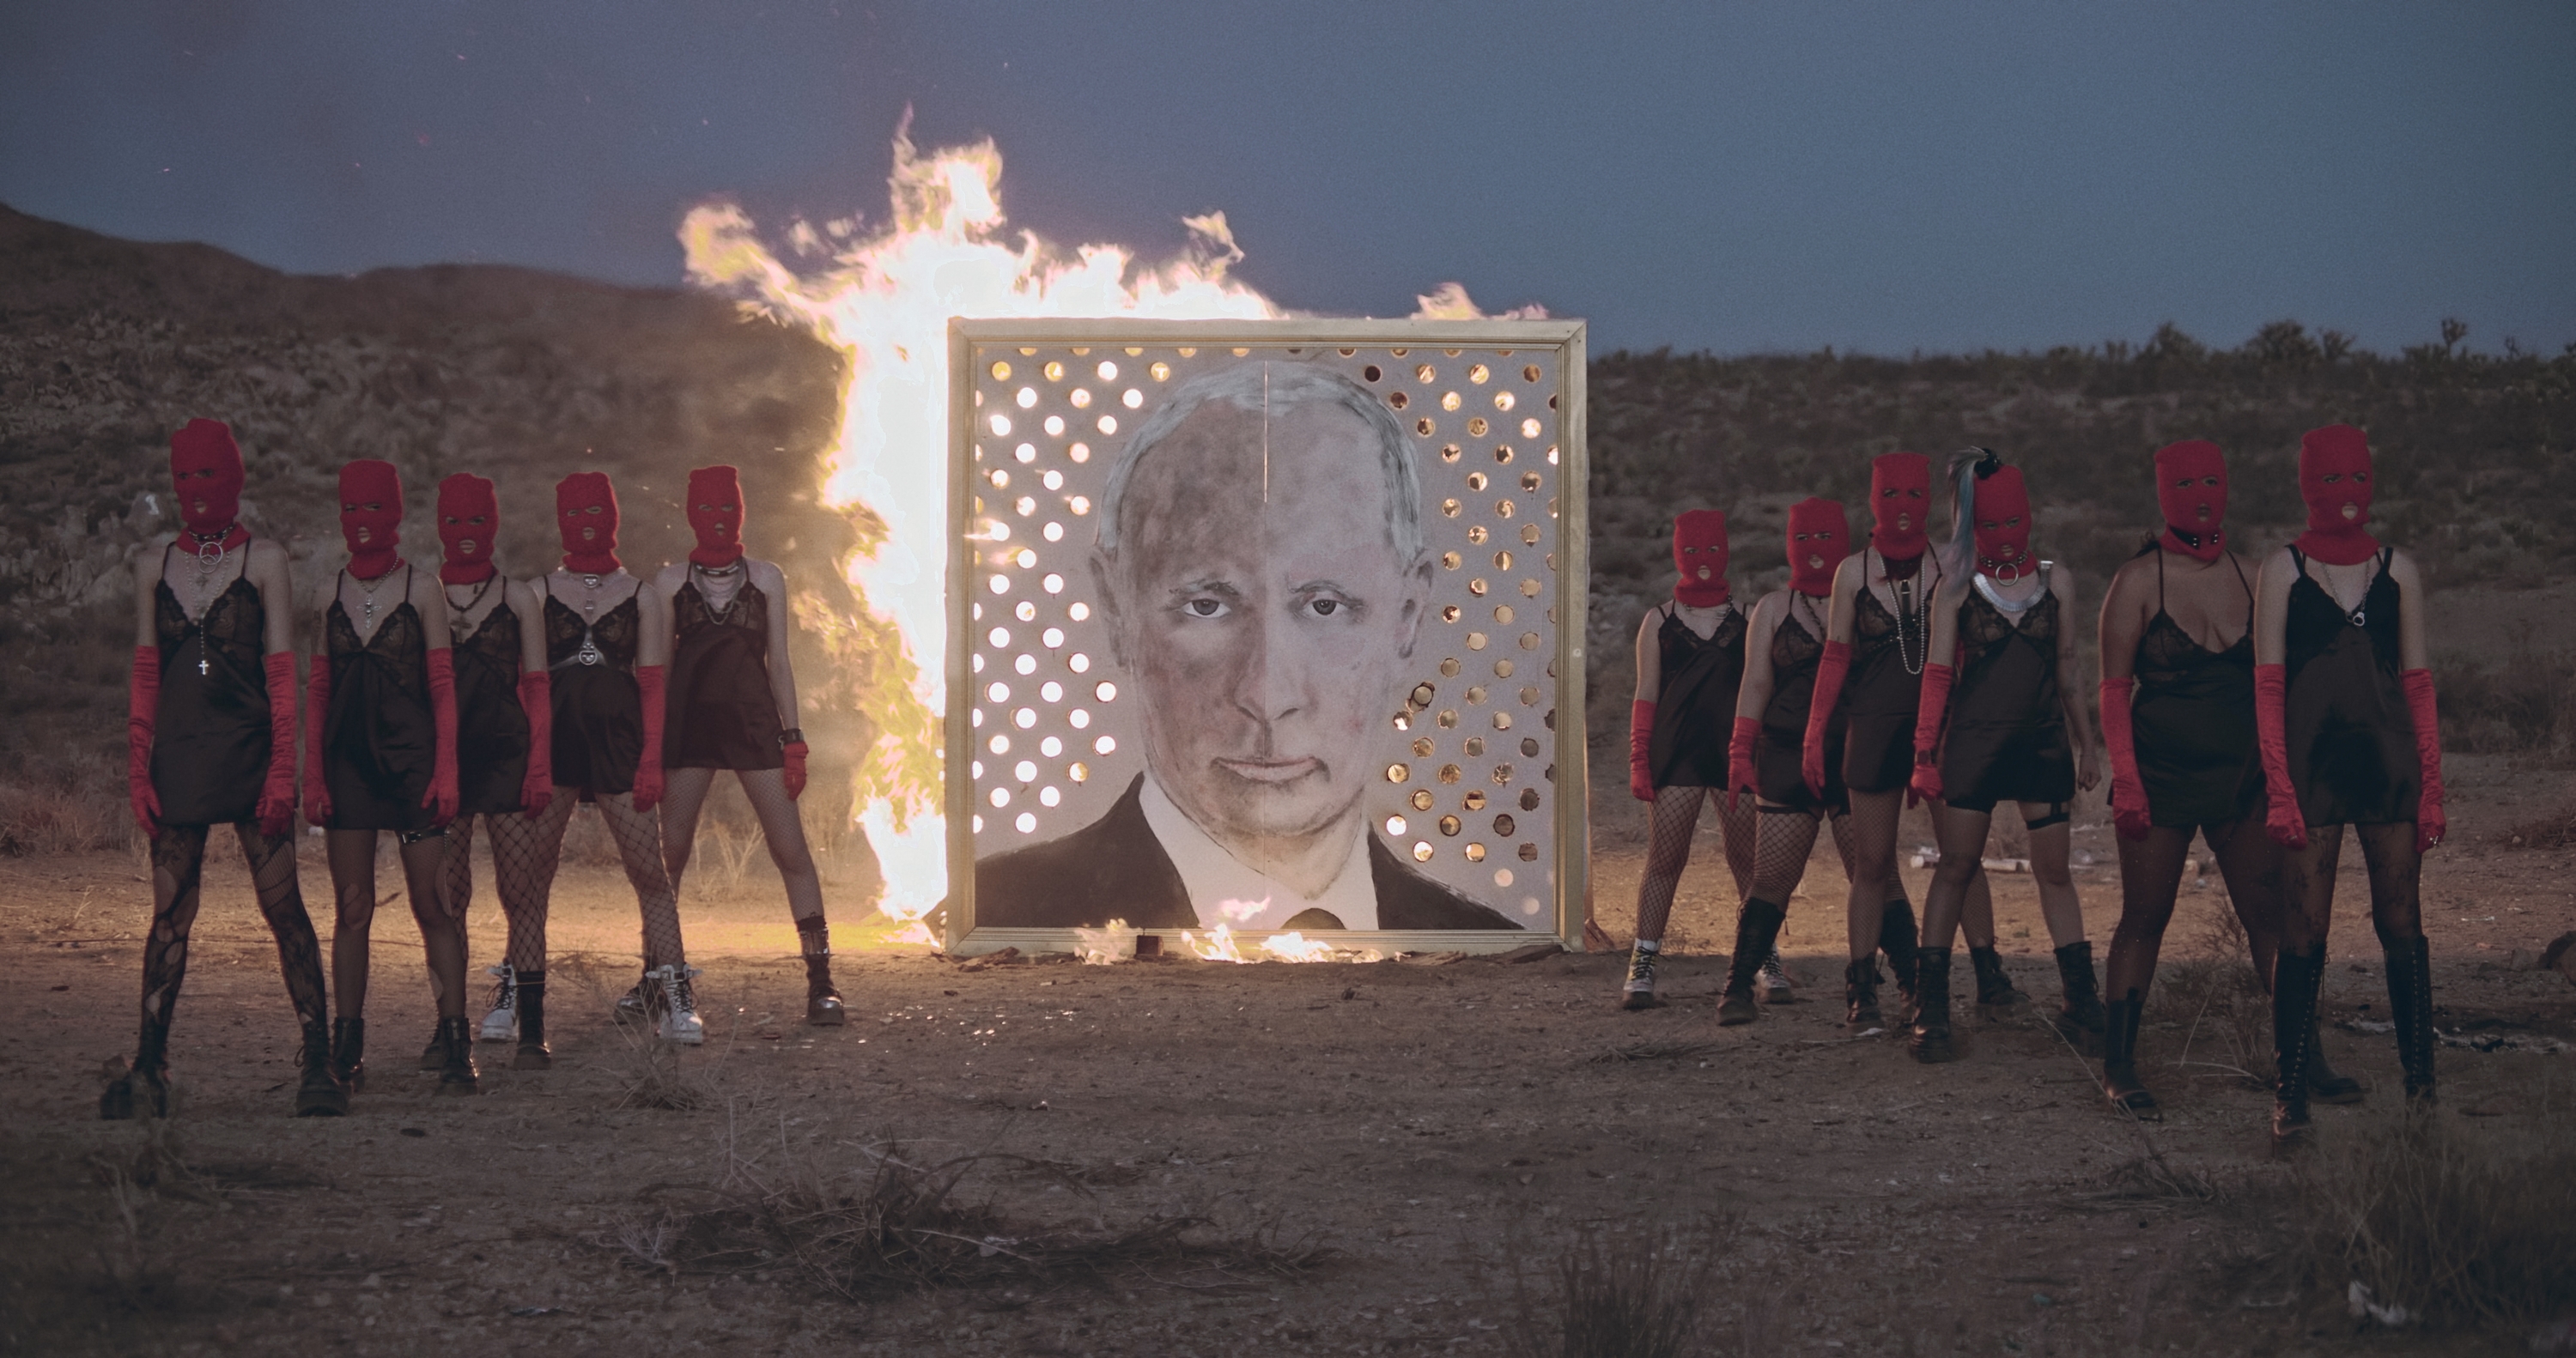 Putins ashes art exhibit